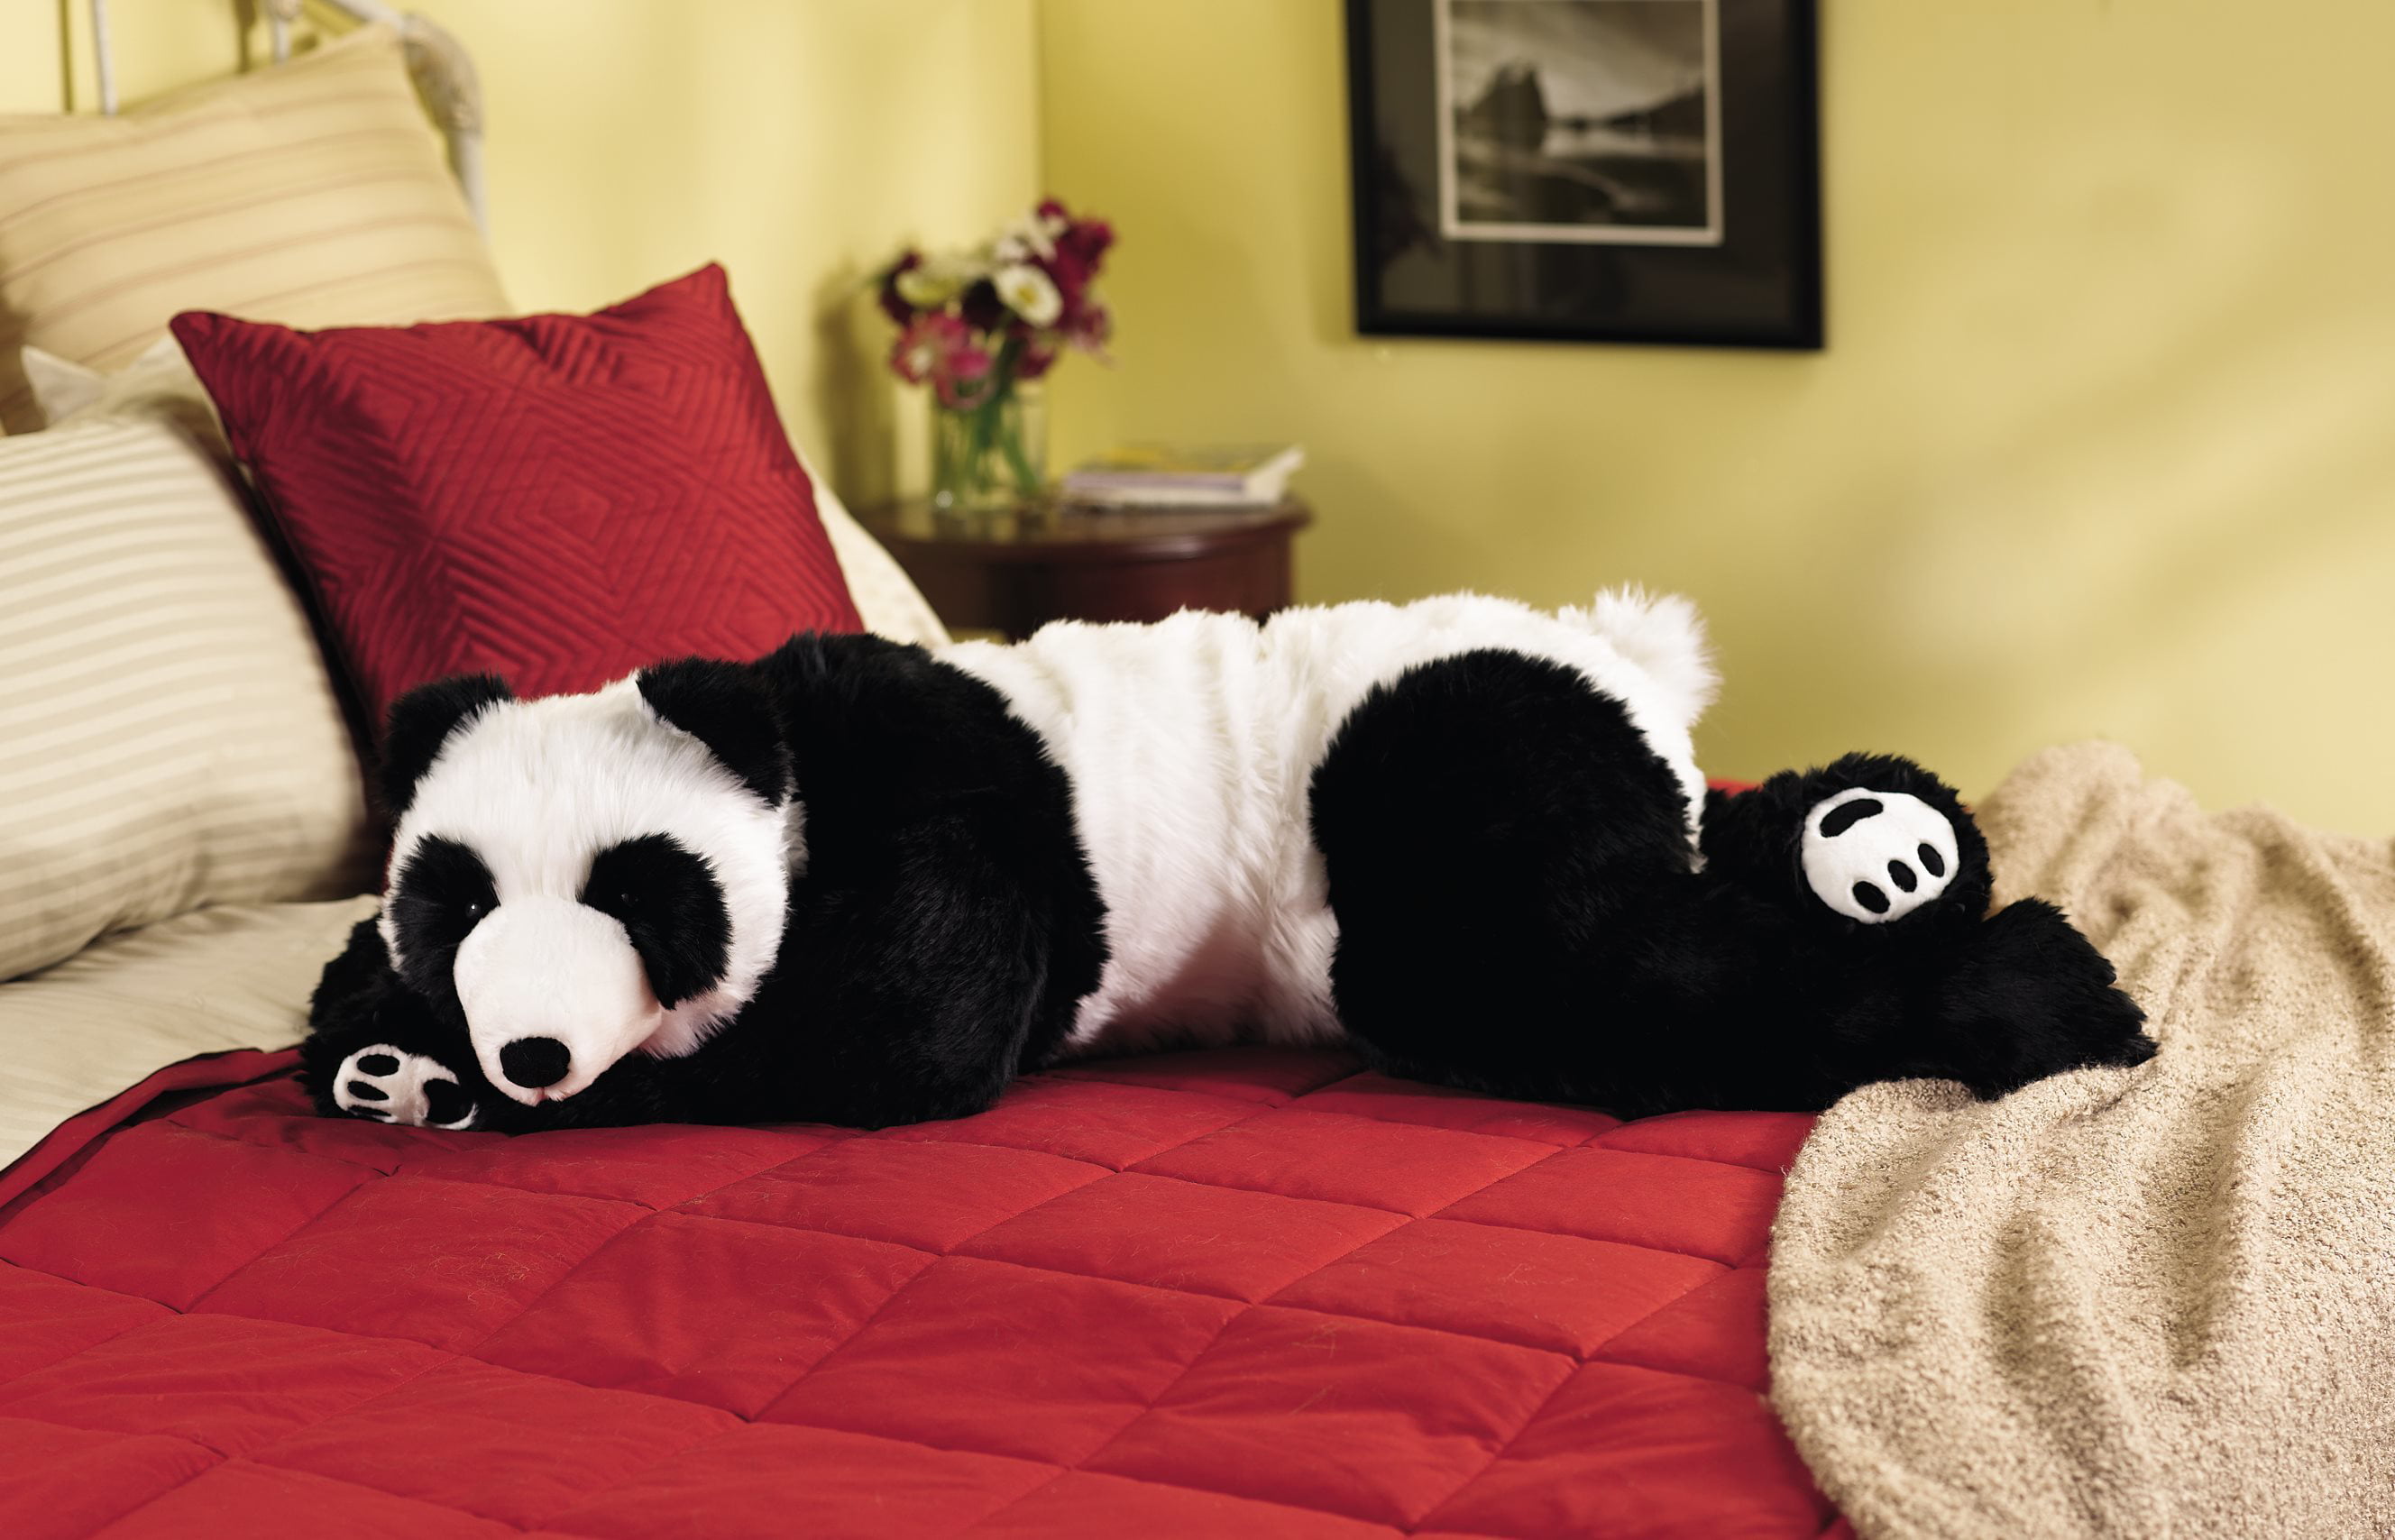 Panda Bear 48L Super-Soft Big Bear Hug Body Pillow with Realistic Accents 